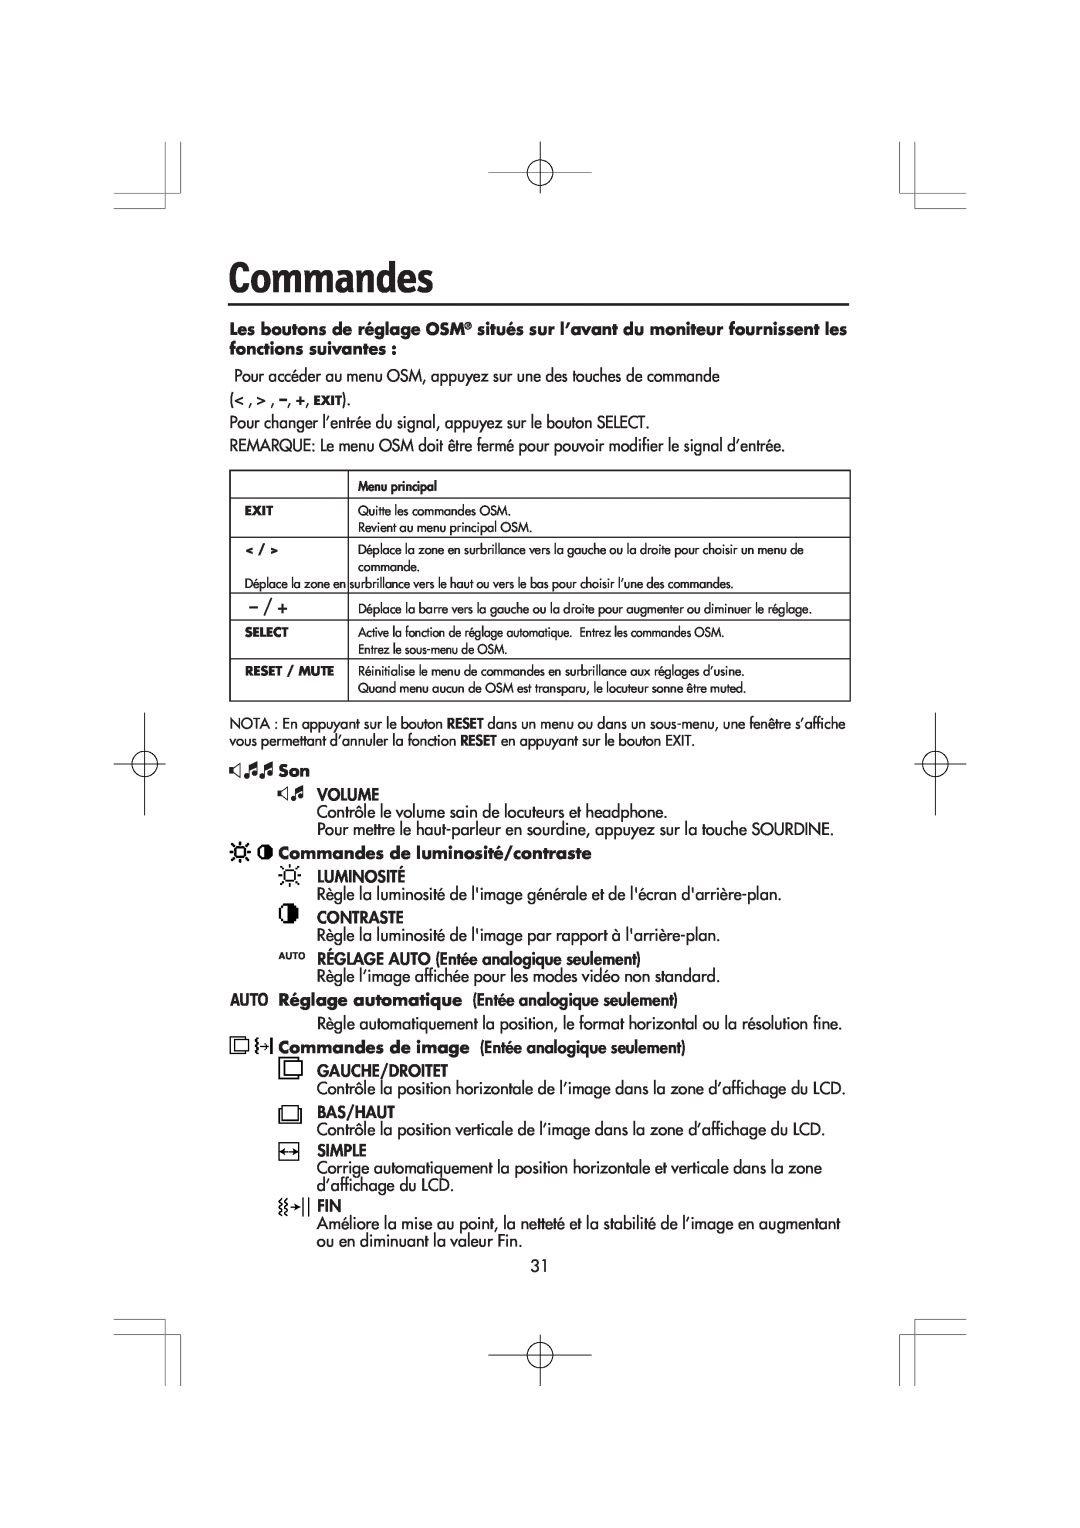 Mitsubishi Electronics LCD1560M manual Commandes de luminosité/contraste 